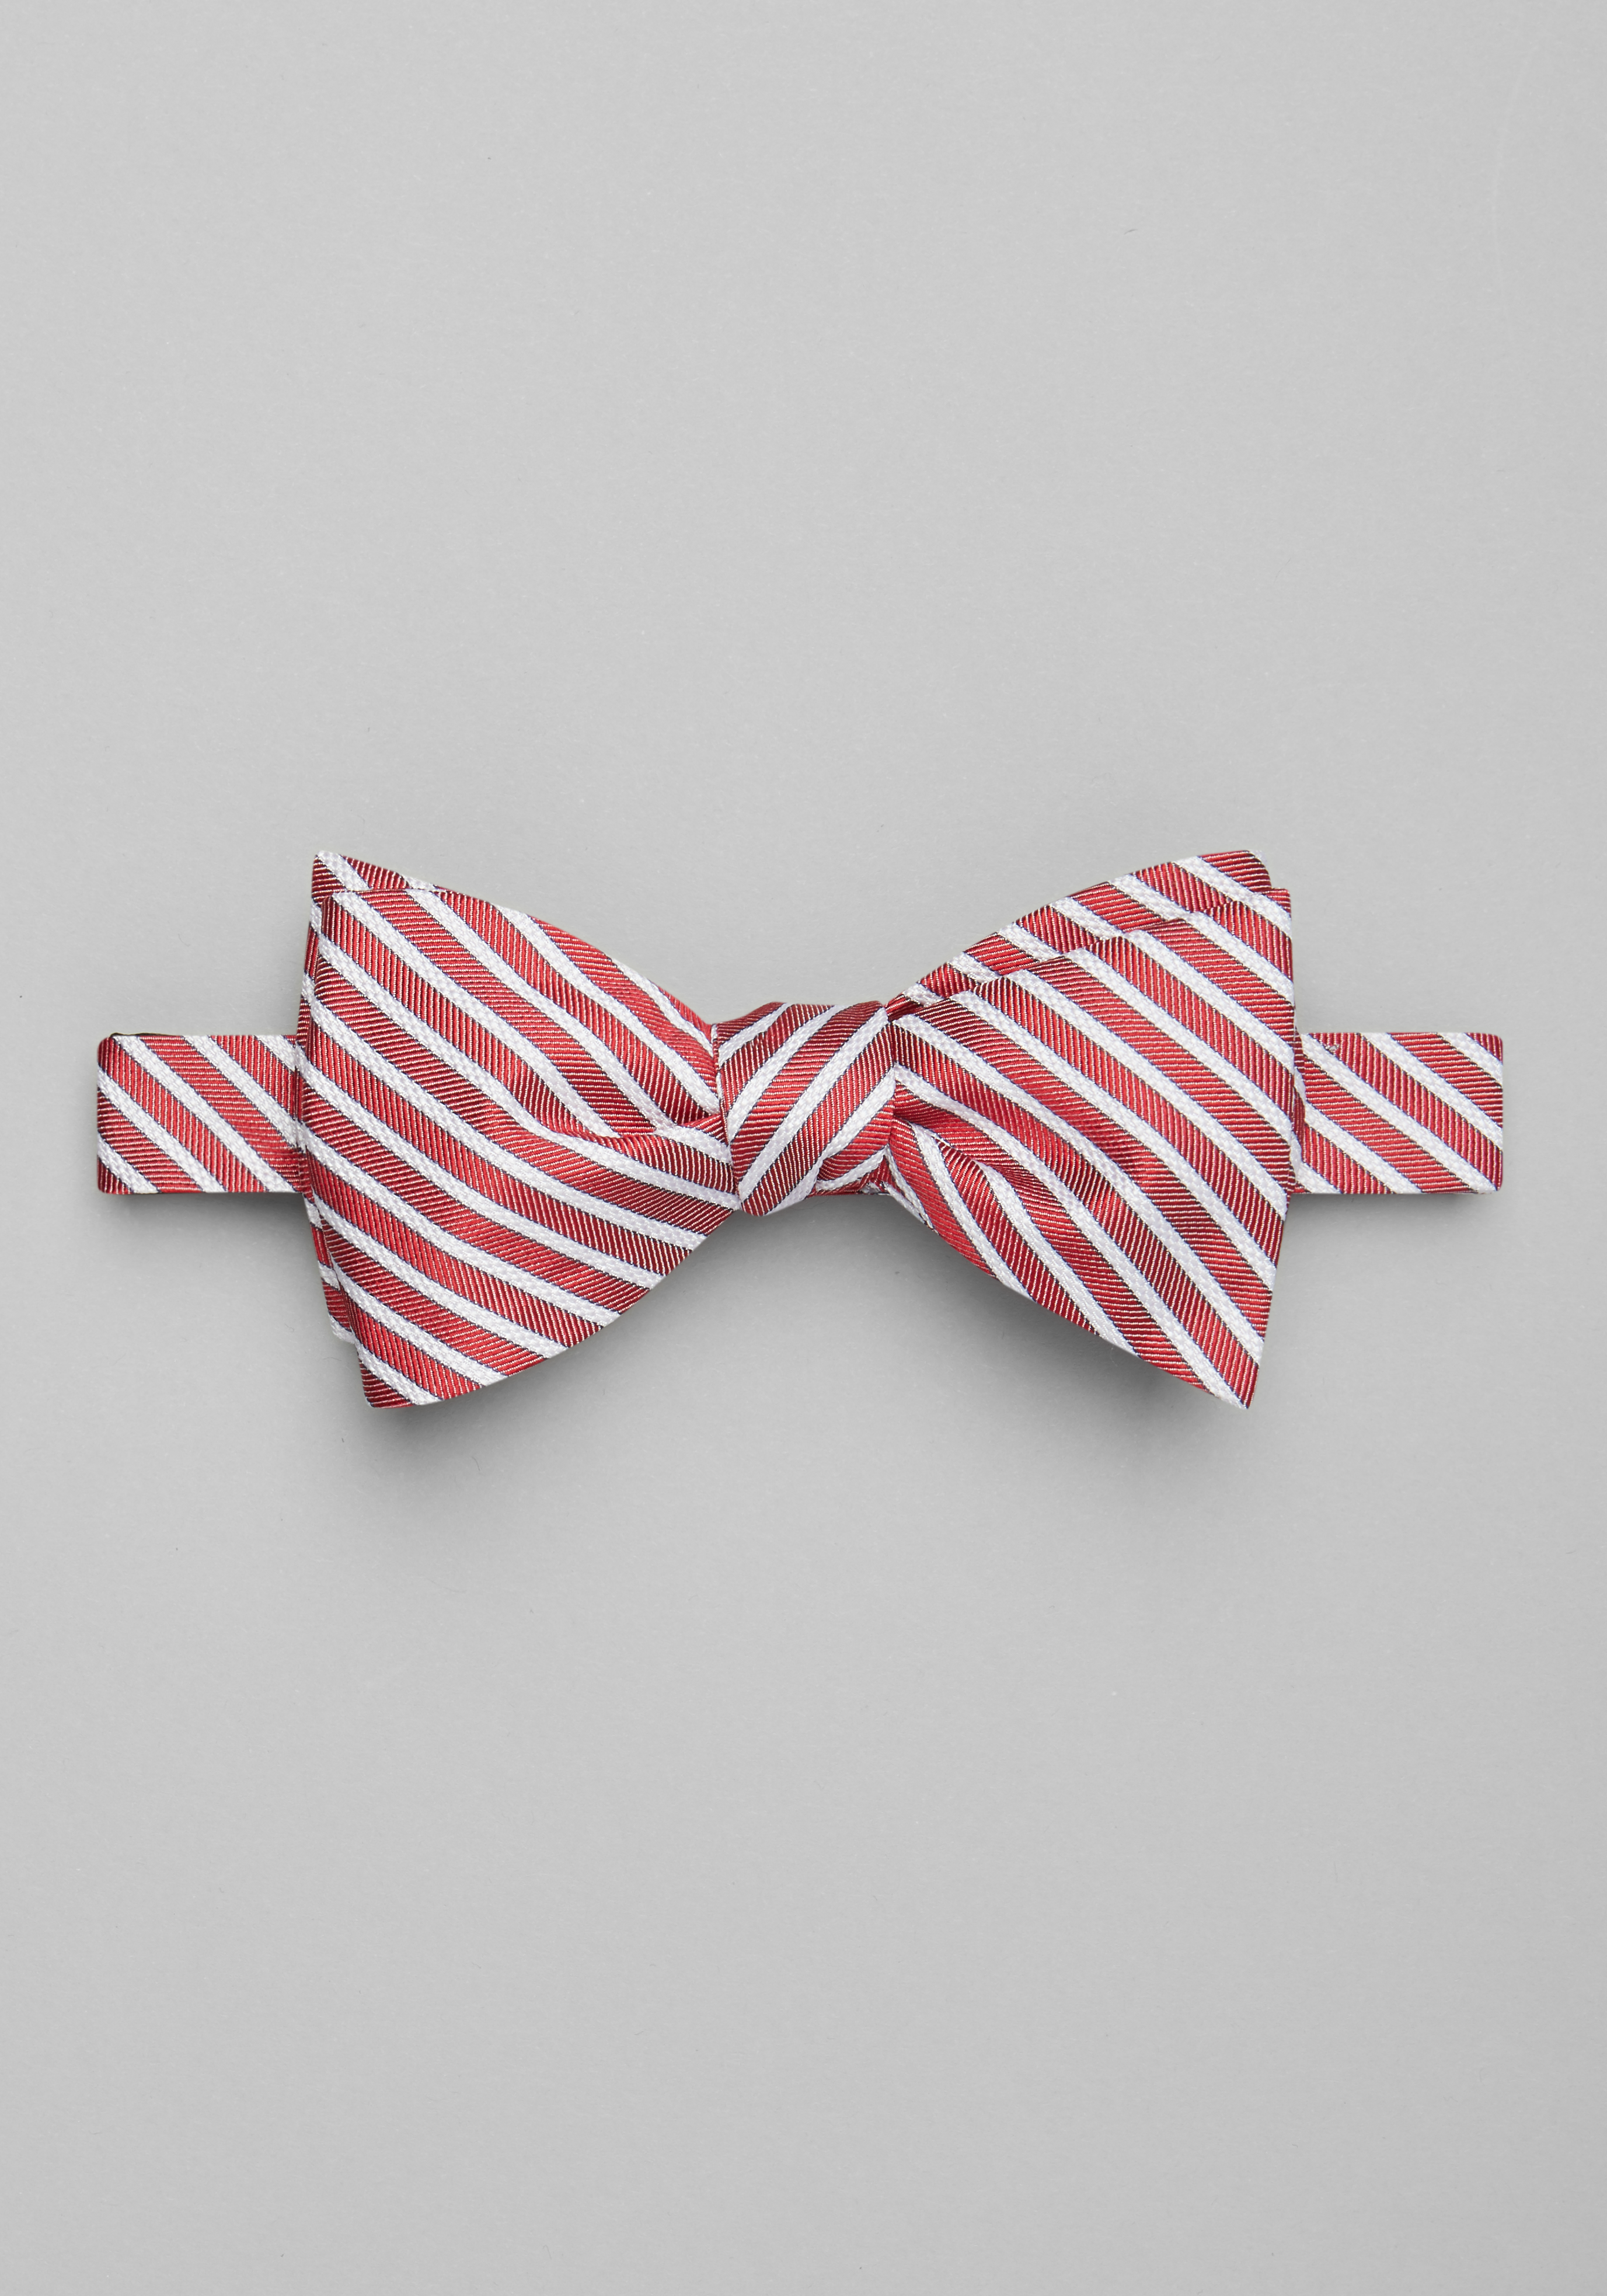 Jos. A. Bank Herringbone Stripe Self-Tie Bow Tie - All Accessories ...